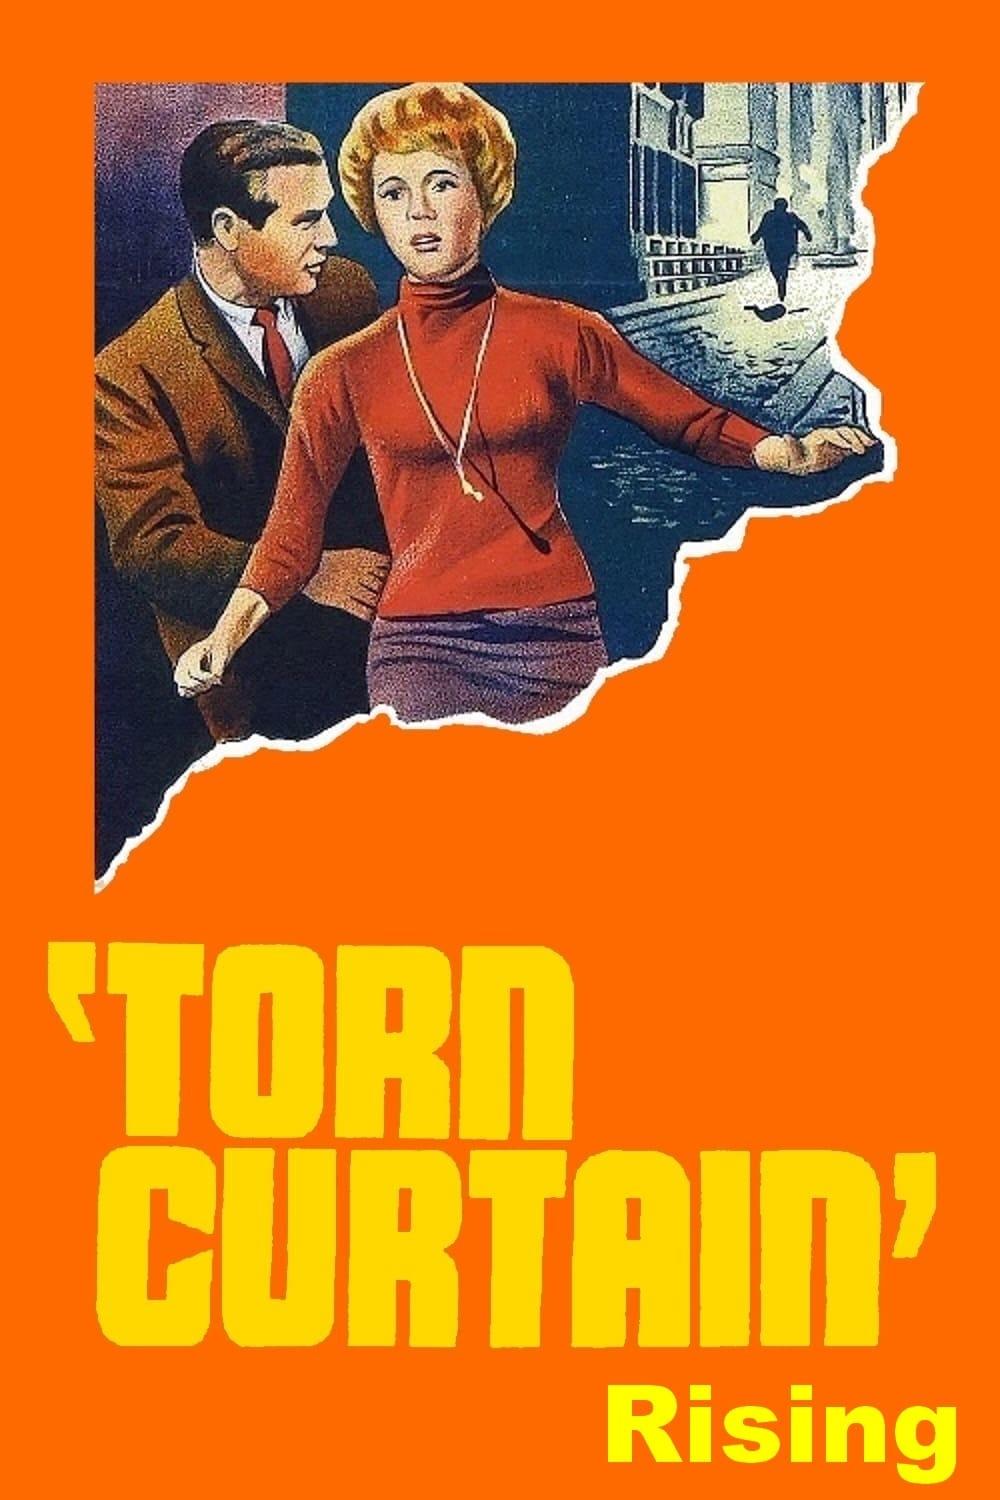 'Torn Curtain' Rising poster